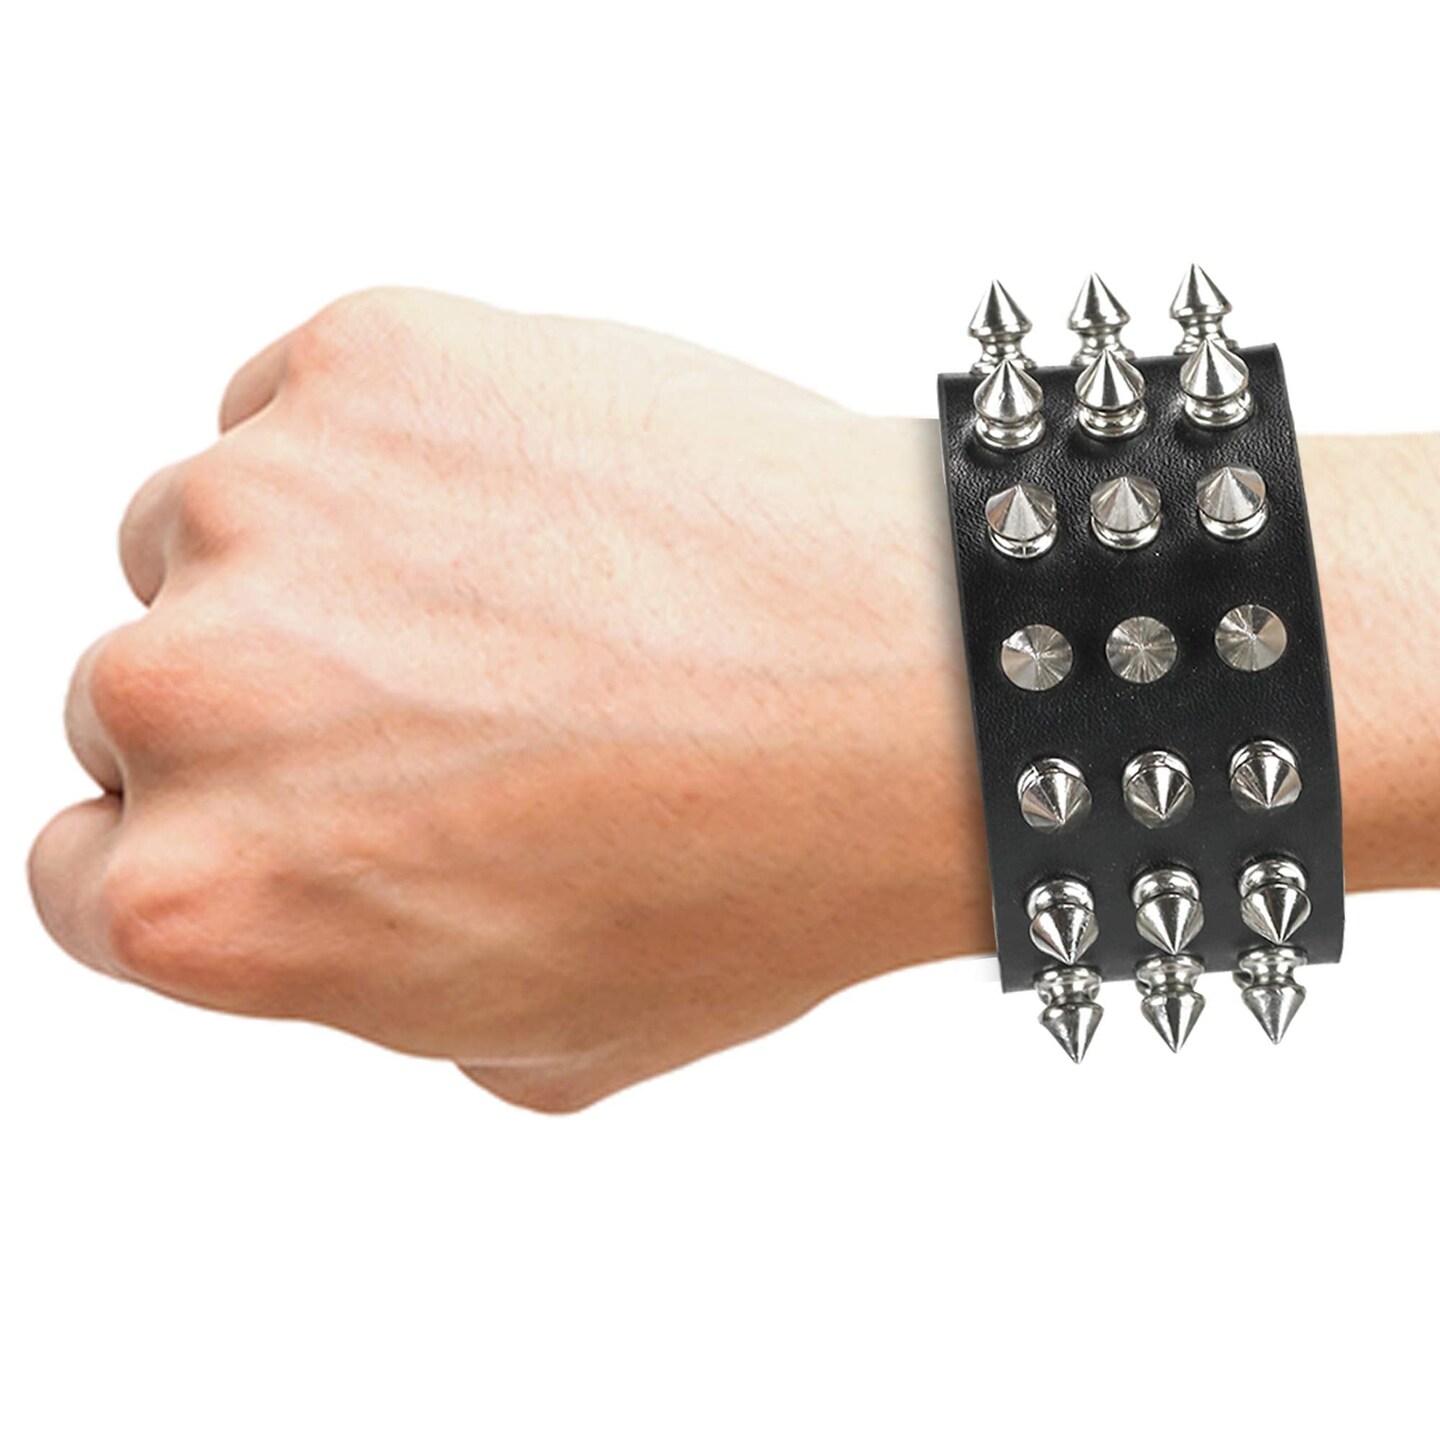 Men Women Punk Rivet Spike Leather Bracelet Wrist Band Cuff Bangle Jewelry  Decor | eBay